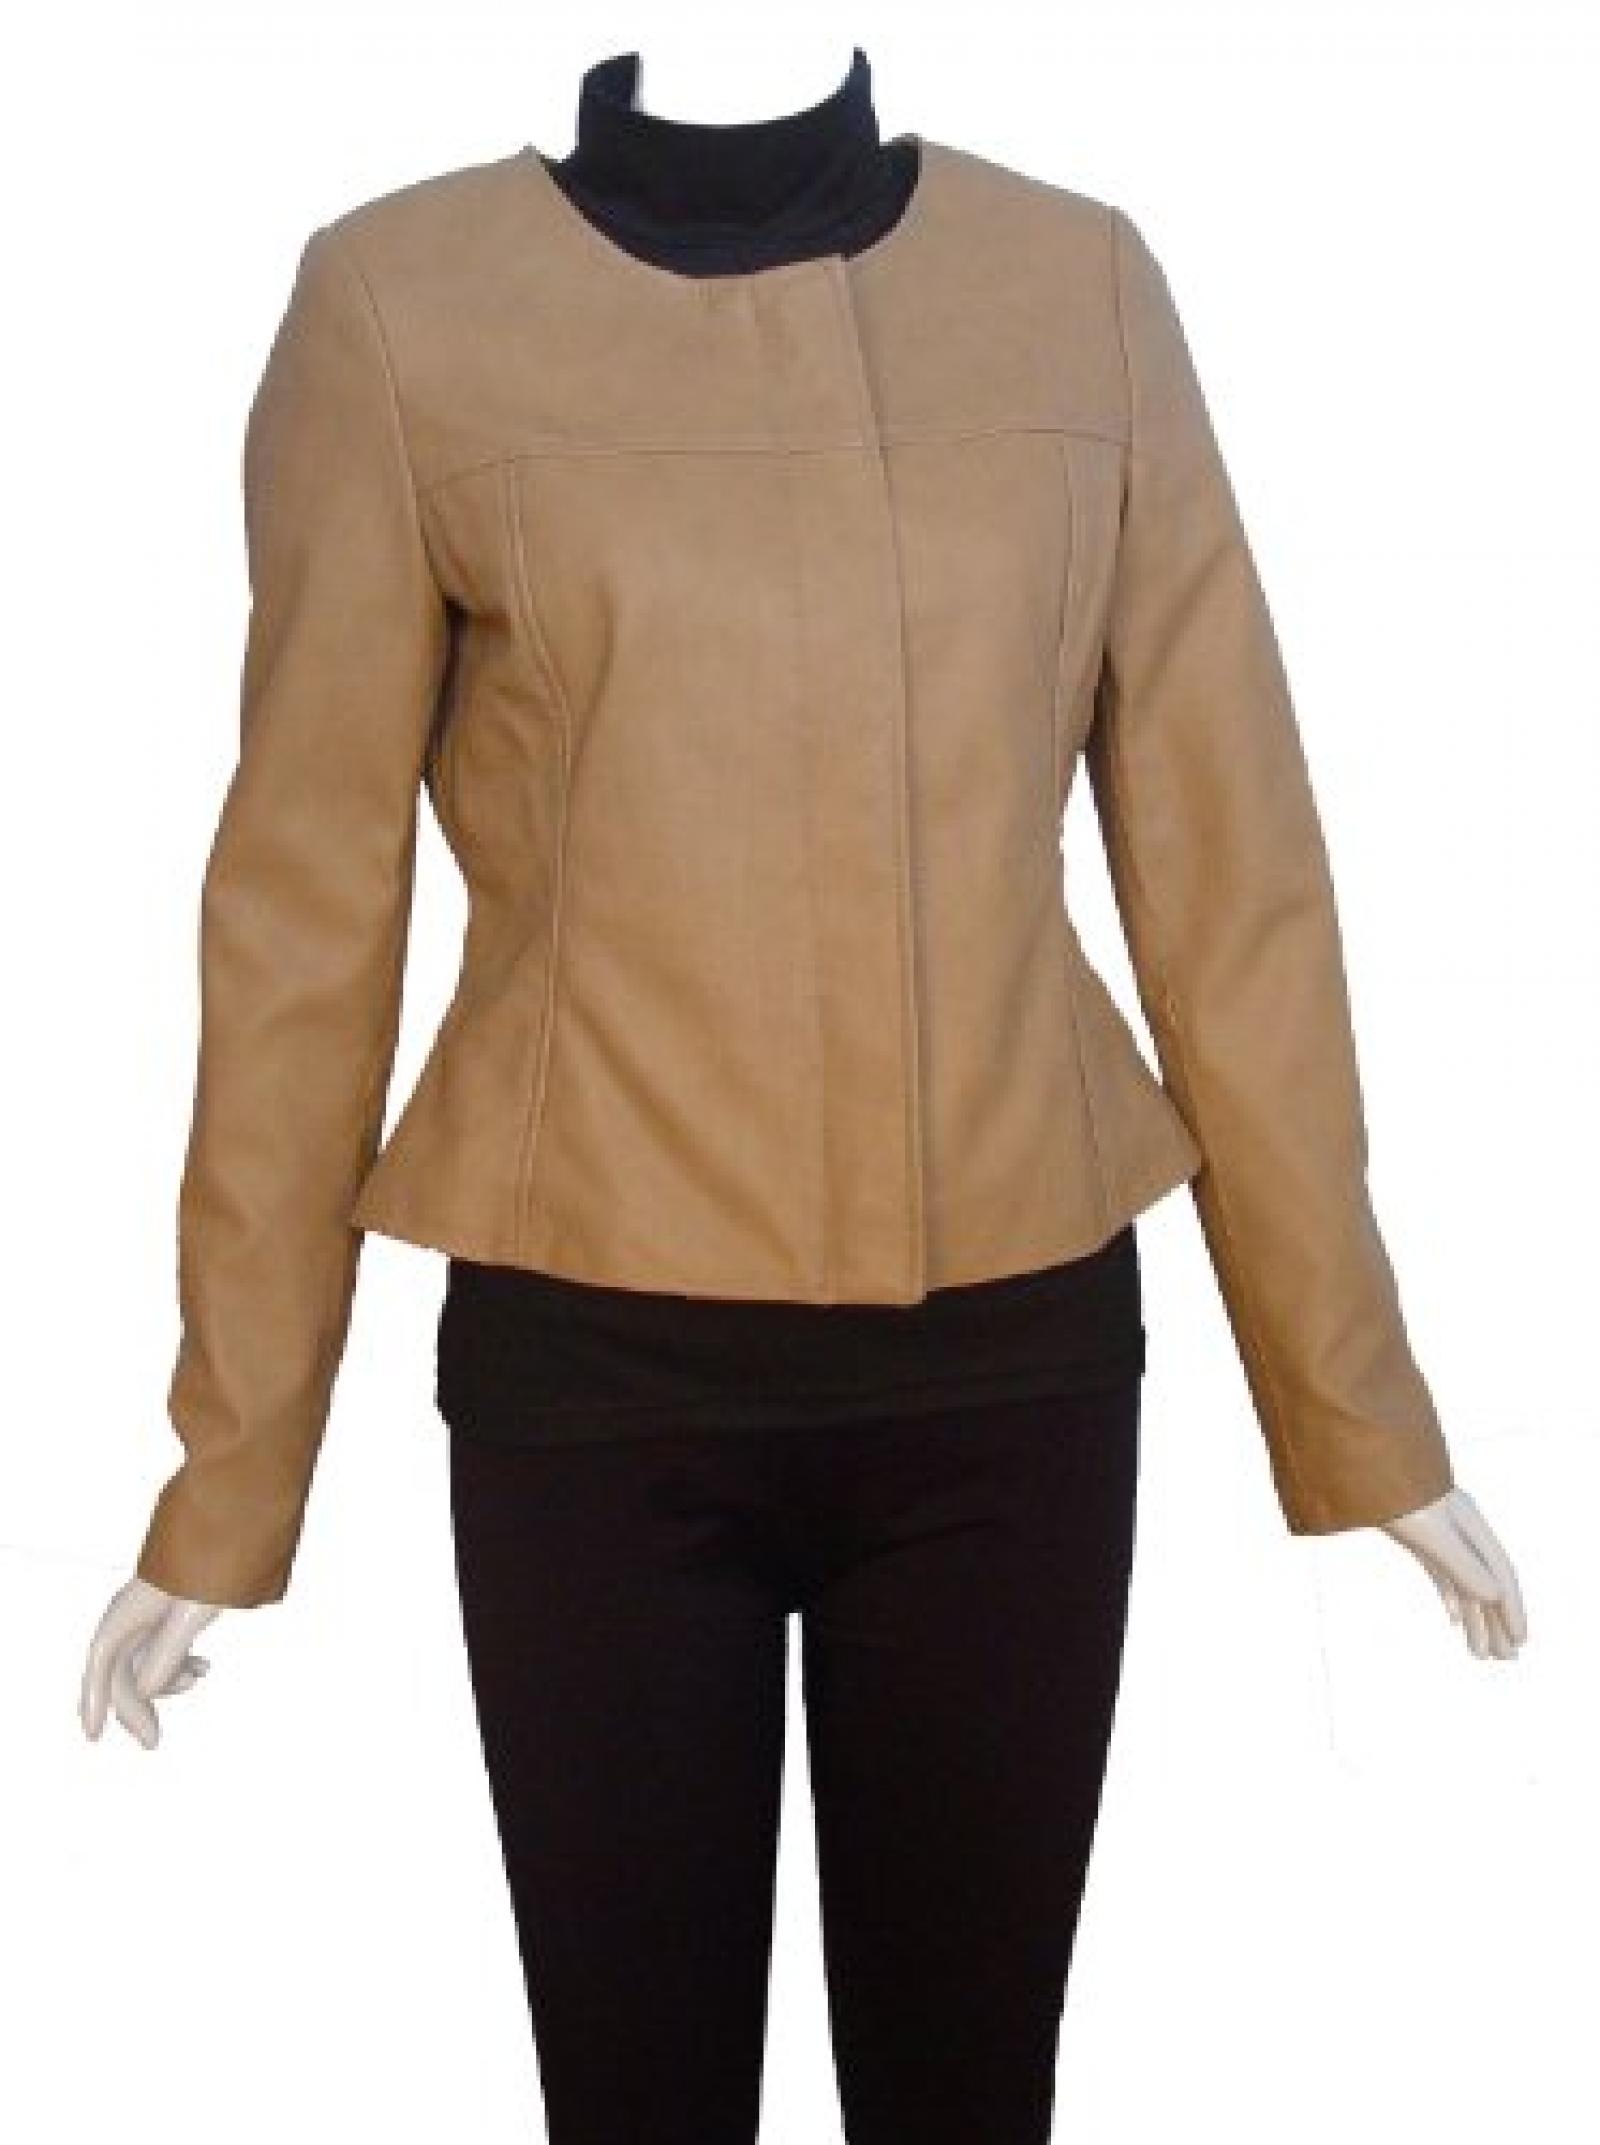 Nettailor FREE tailoring Women PETITE SZ 4066 Leather Moto Jacket Collarless 